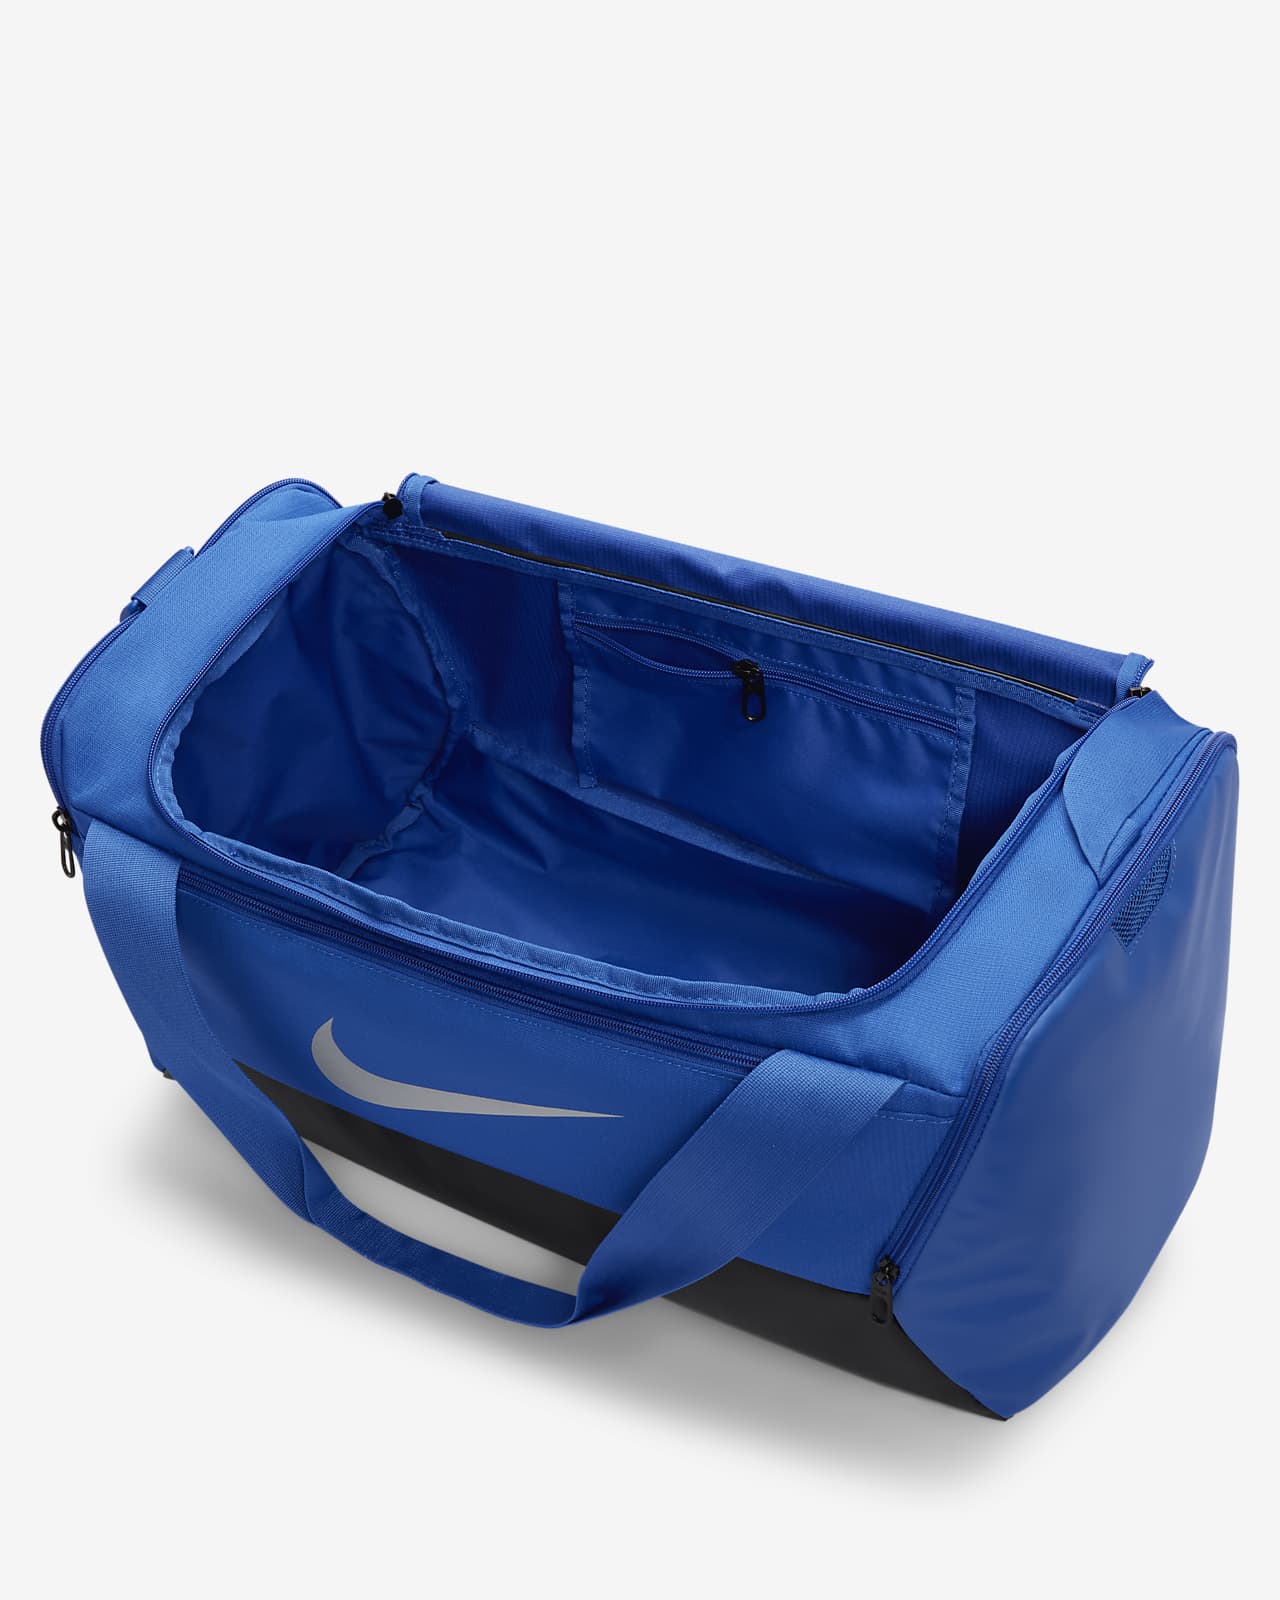 Nike Brasilia 9.5 Training Duffel Bag (Small, 41L